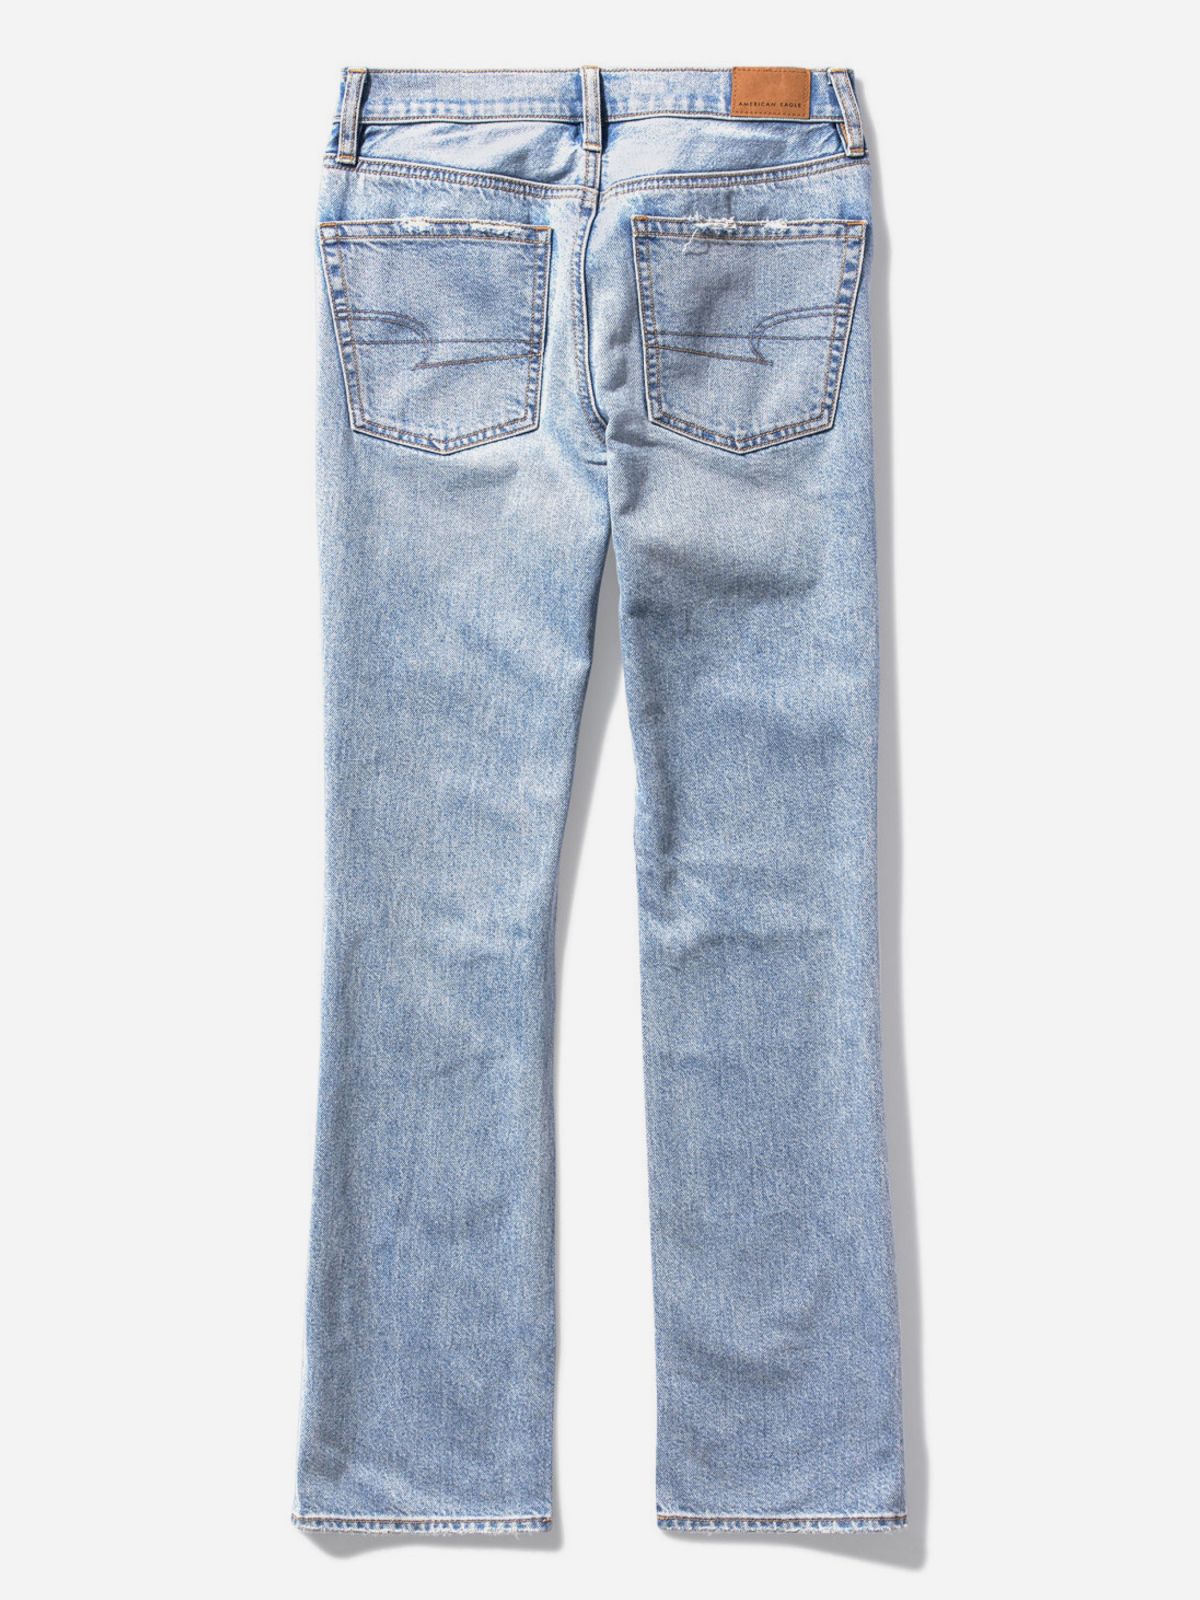  מכנסי ג'ינס 90S BOOTCUT של AMERICAN EAGLE